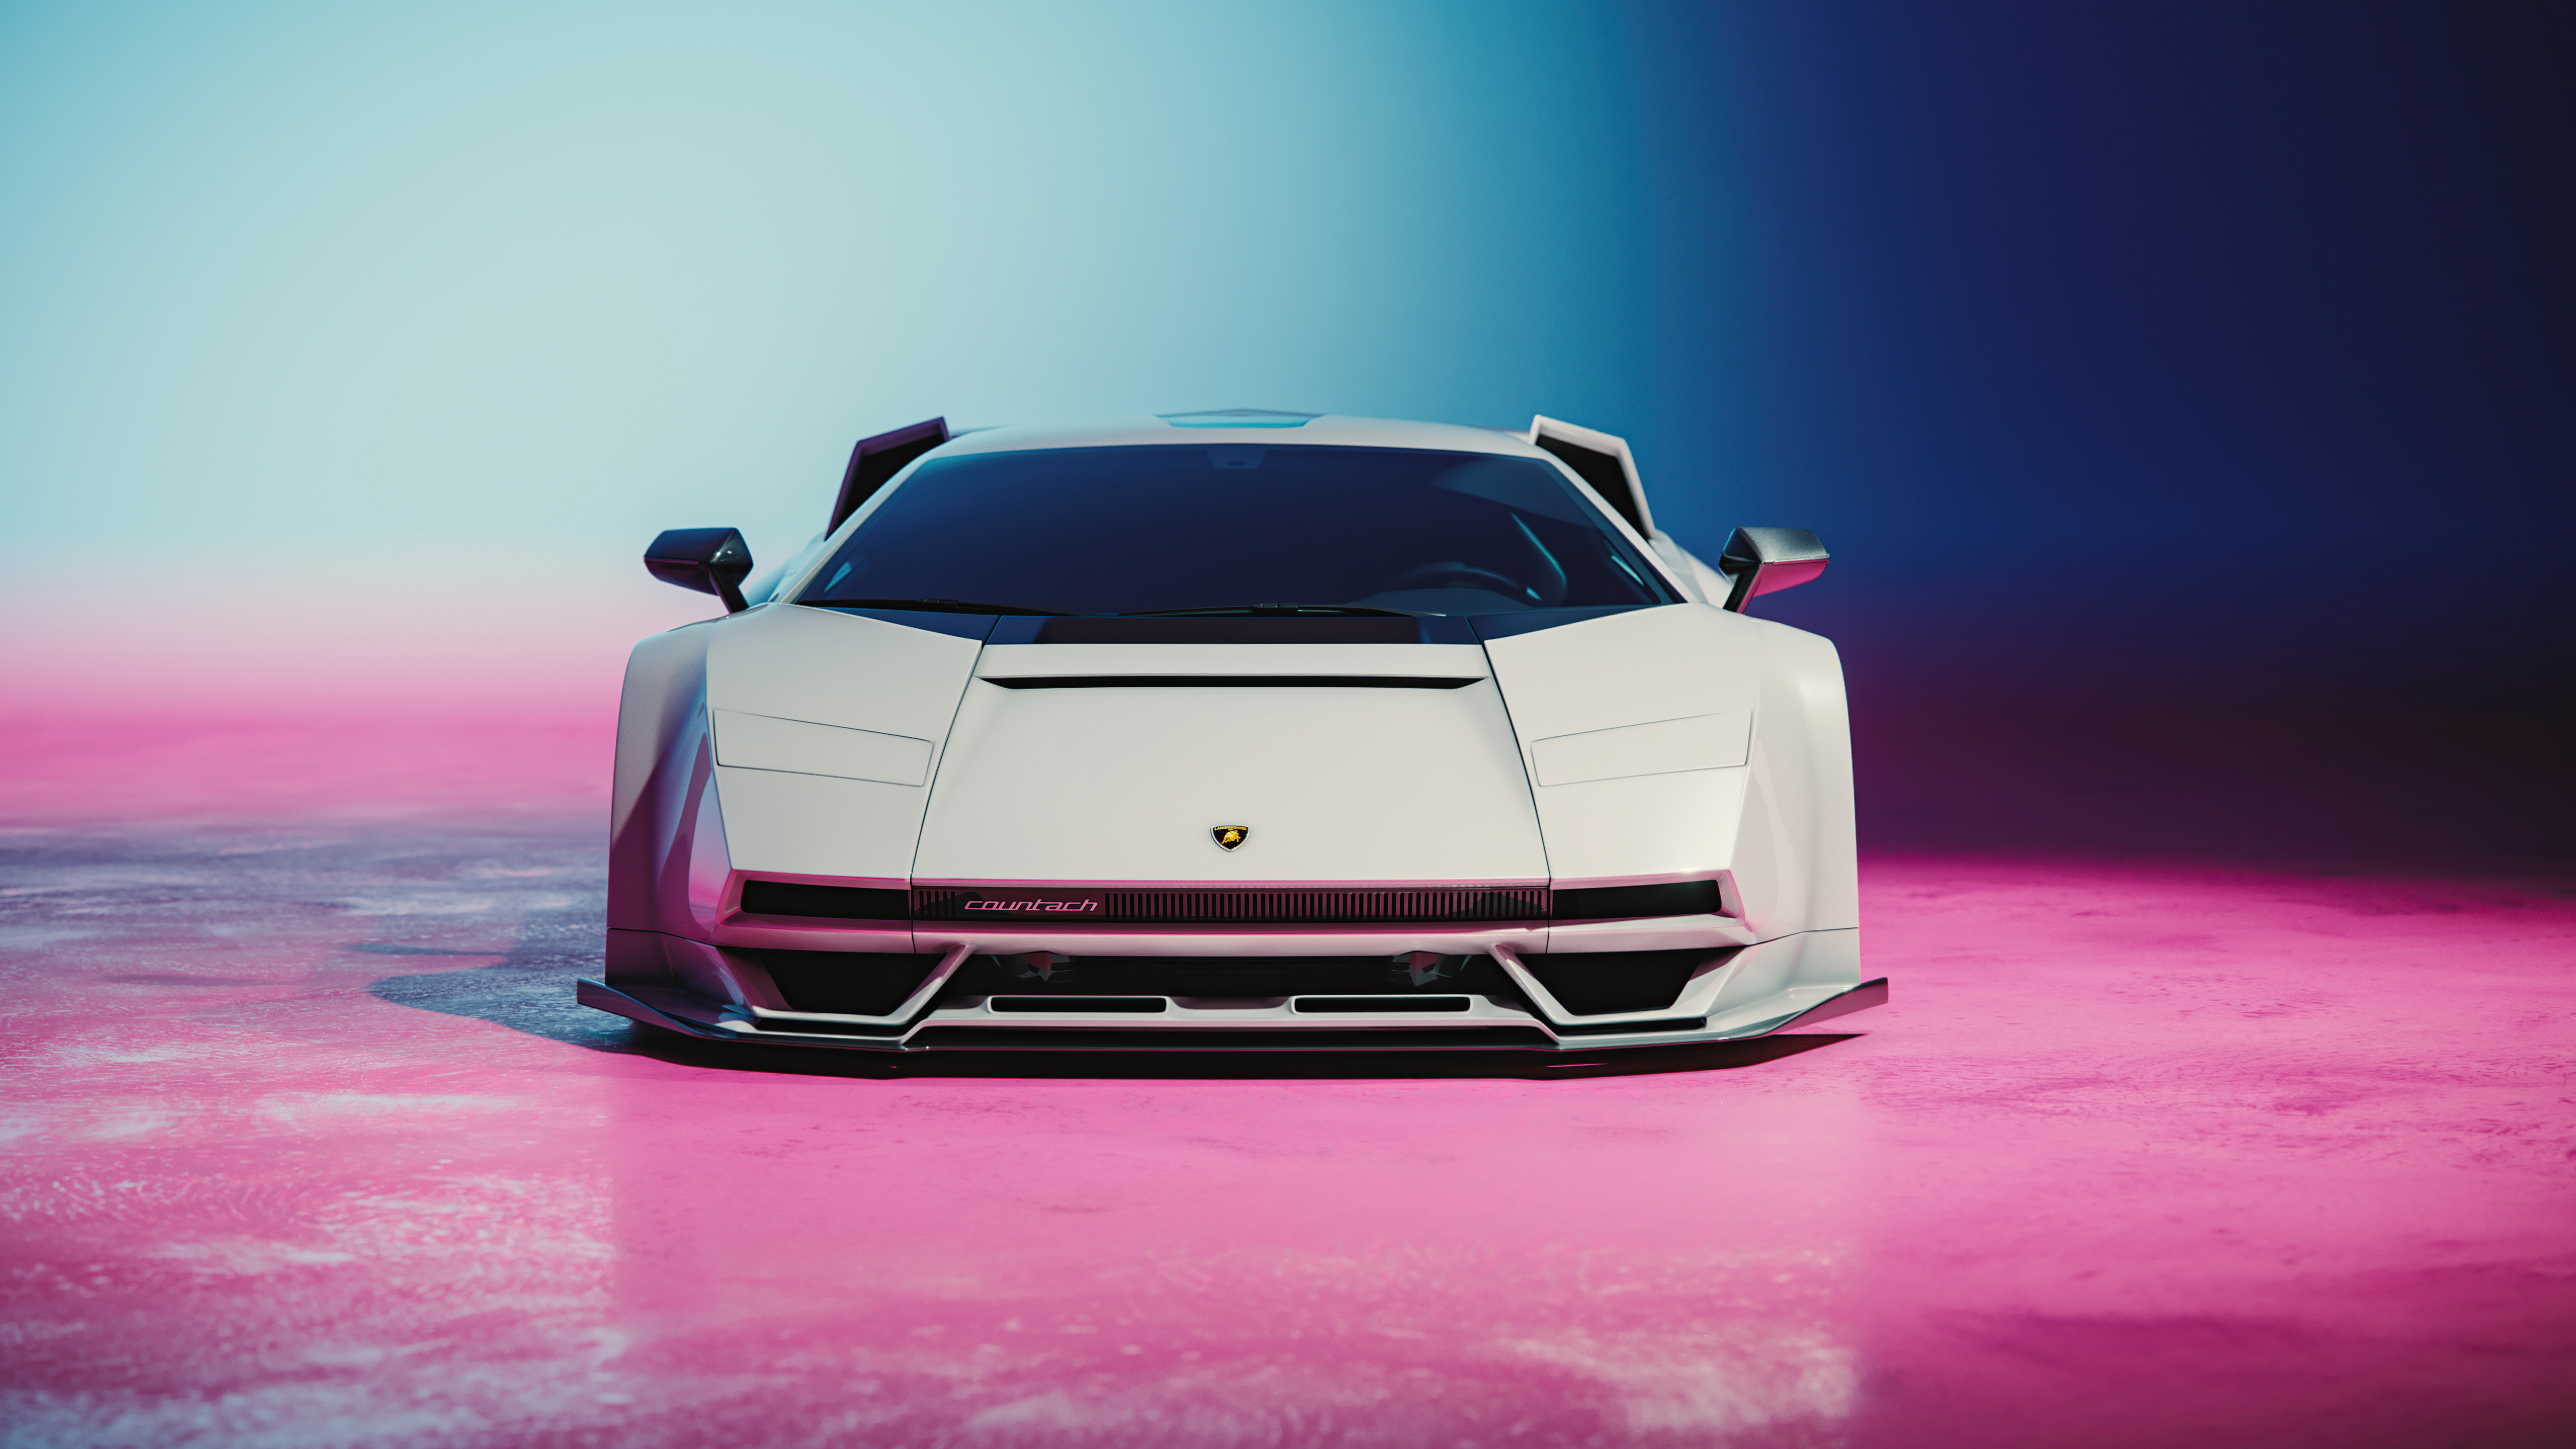 Lamborghini Countach Concept HD Cars, 4k Wallpaper, Image, Background, Photo and Picture